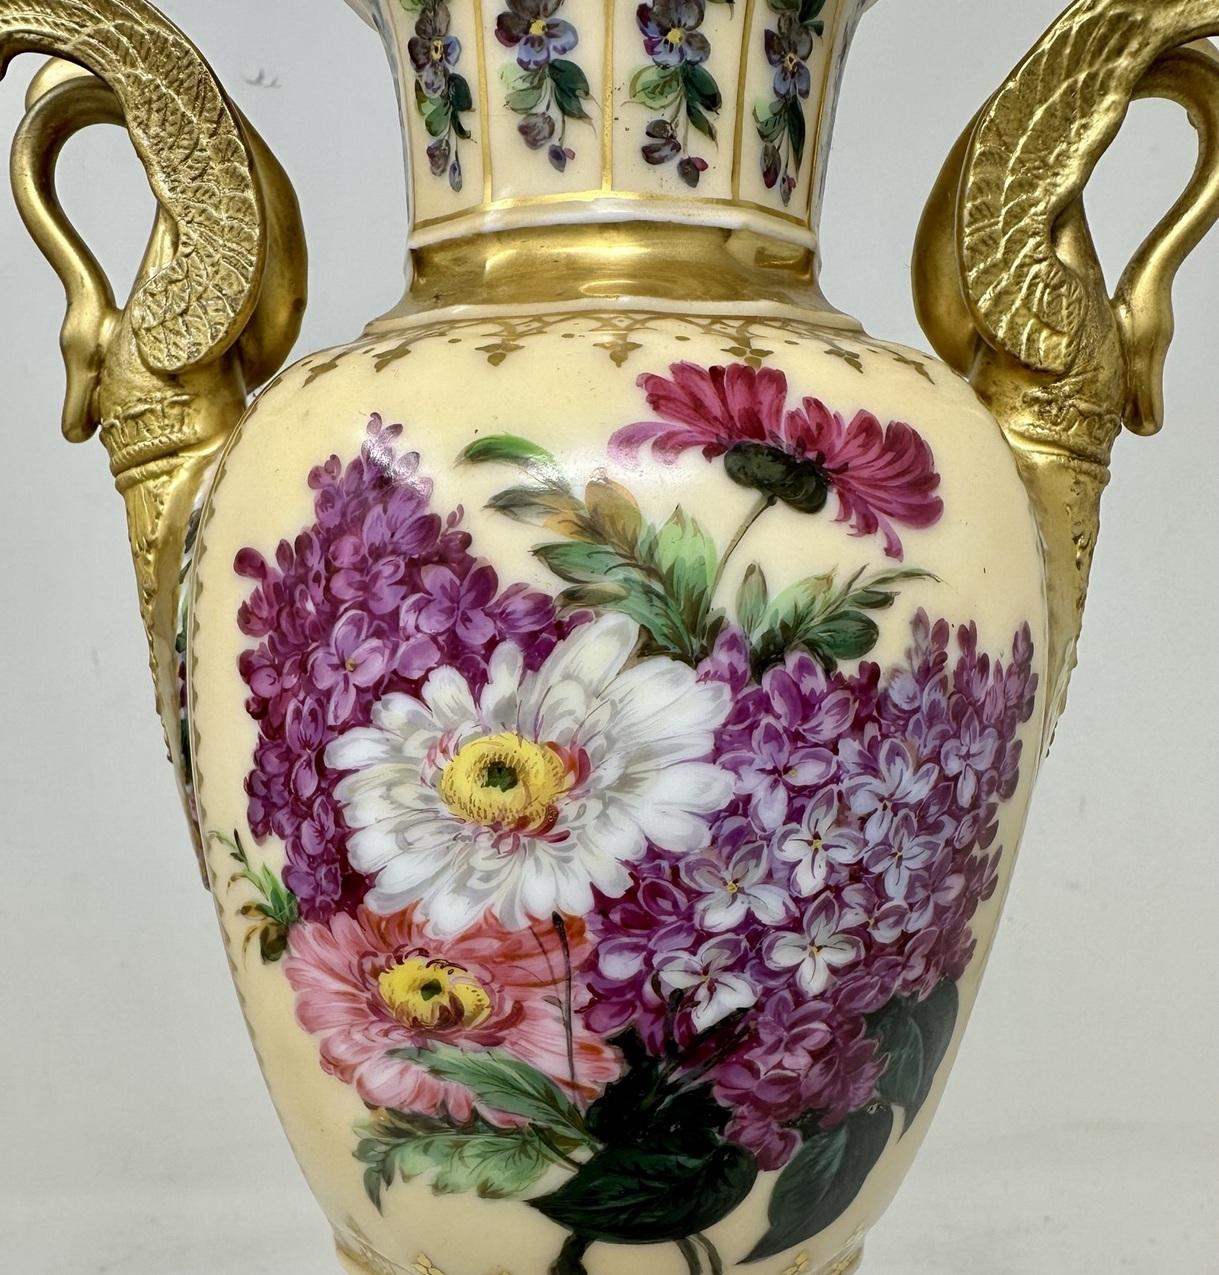 Ceramic Antique Pair French Sèvres Style Porcelain Gilt Mounted Urns Vases Centerpieces